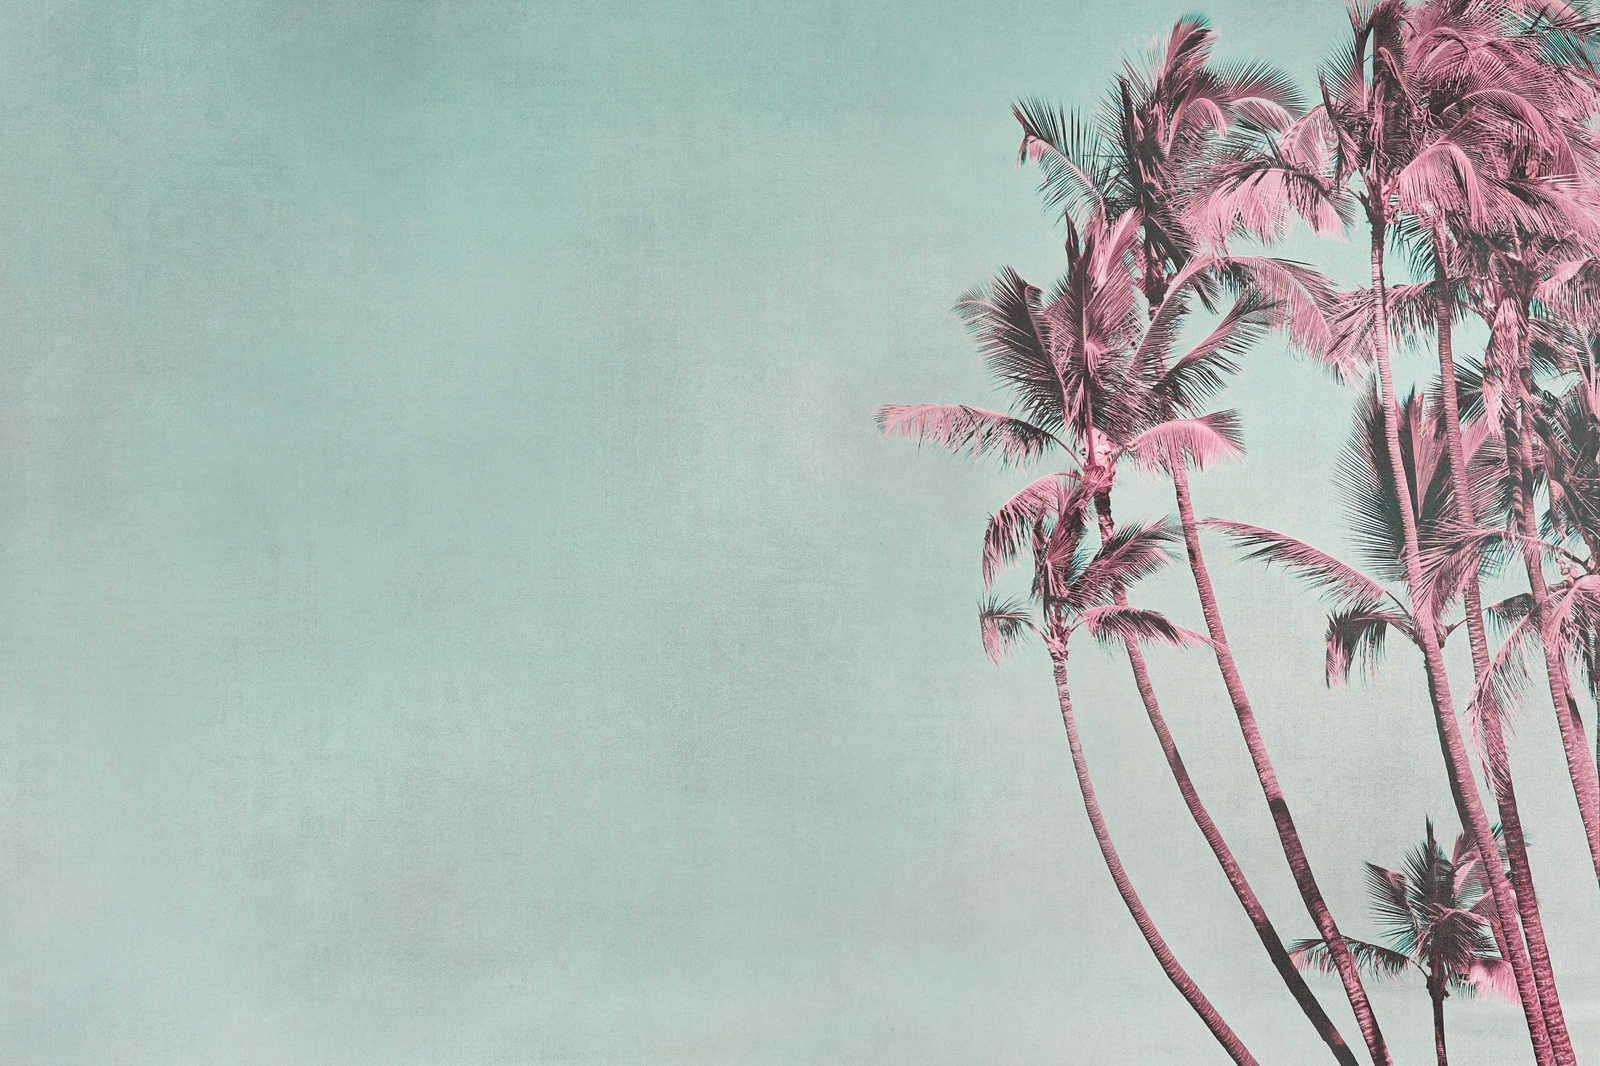             Pittura su tela di palma Brezza tropicale in turchese e rosa - 0,90 m x 0,60 m
        